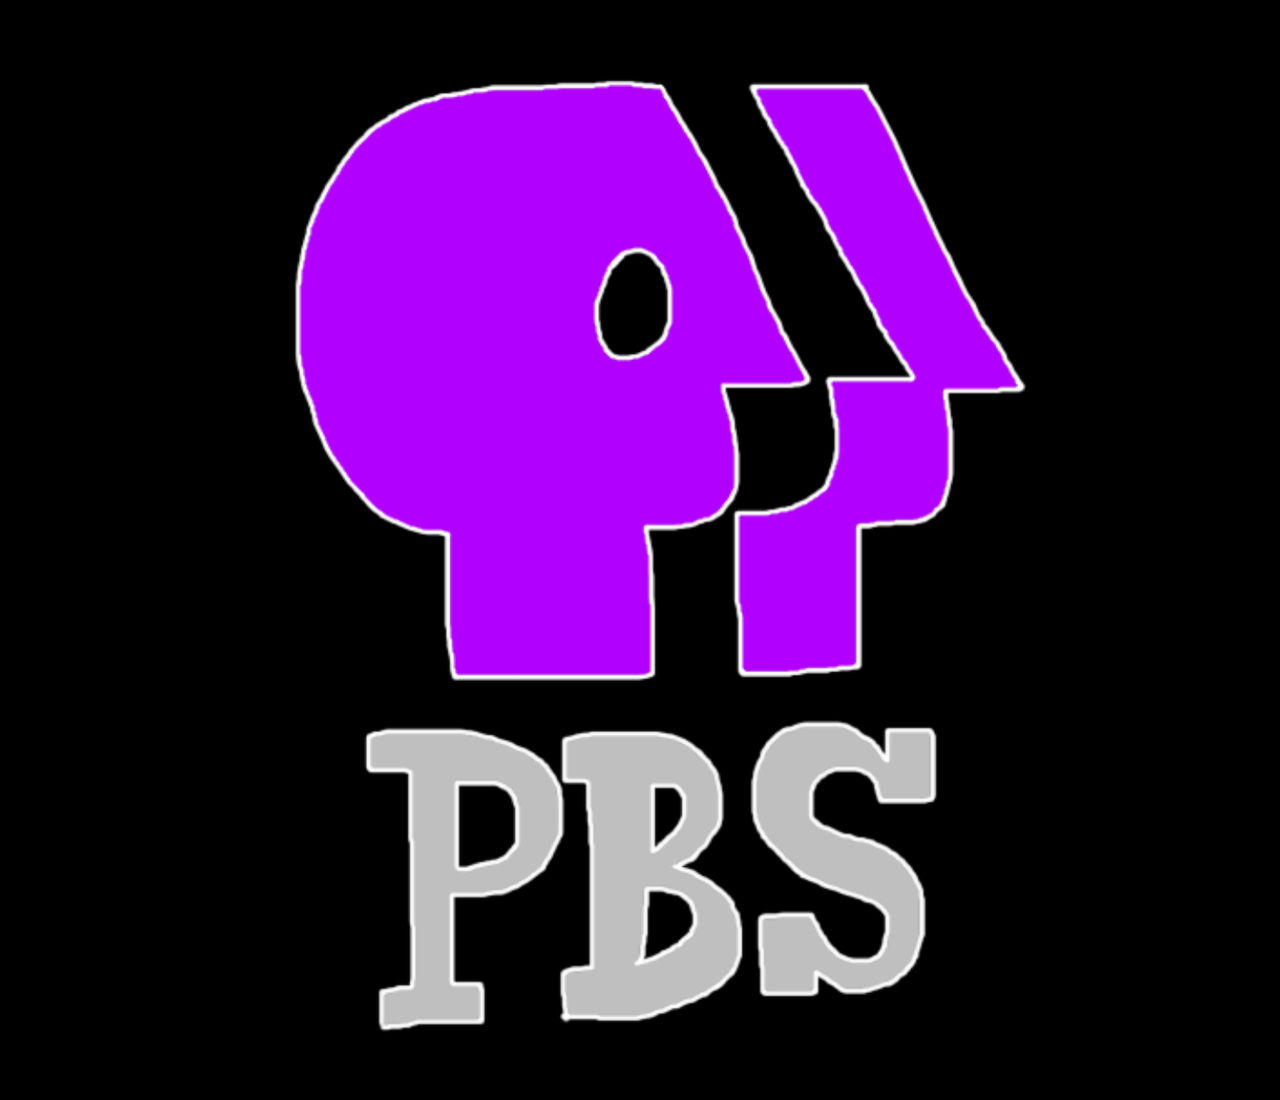 PBS Digital Art - 1984 Logo Drawing by lukesamsthesecond on DeviantArt